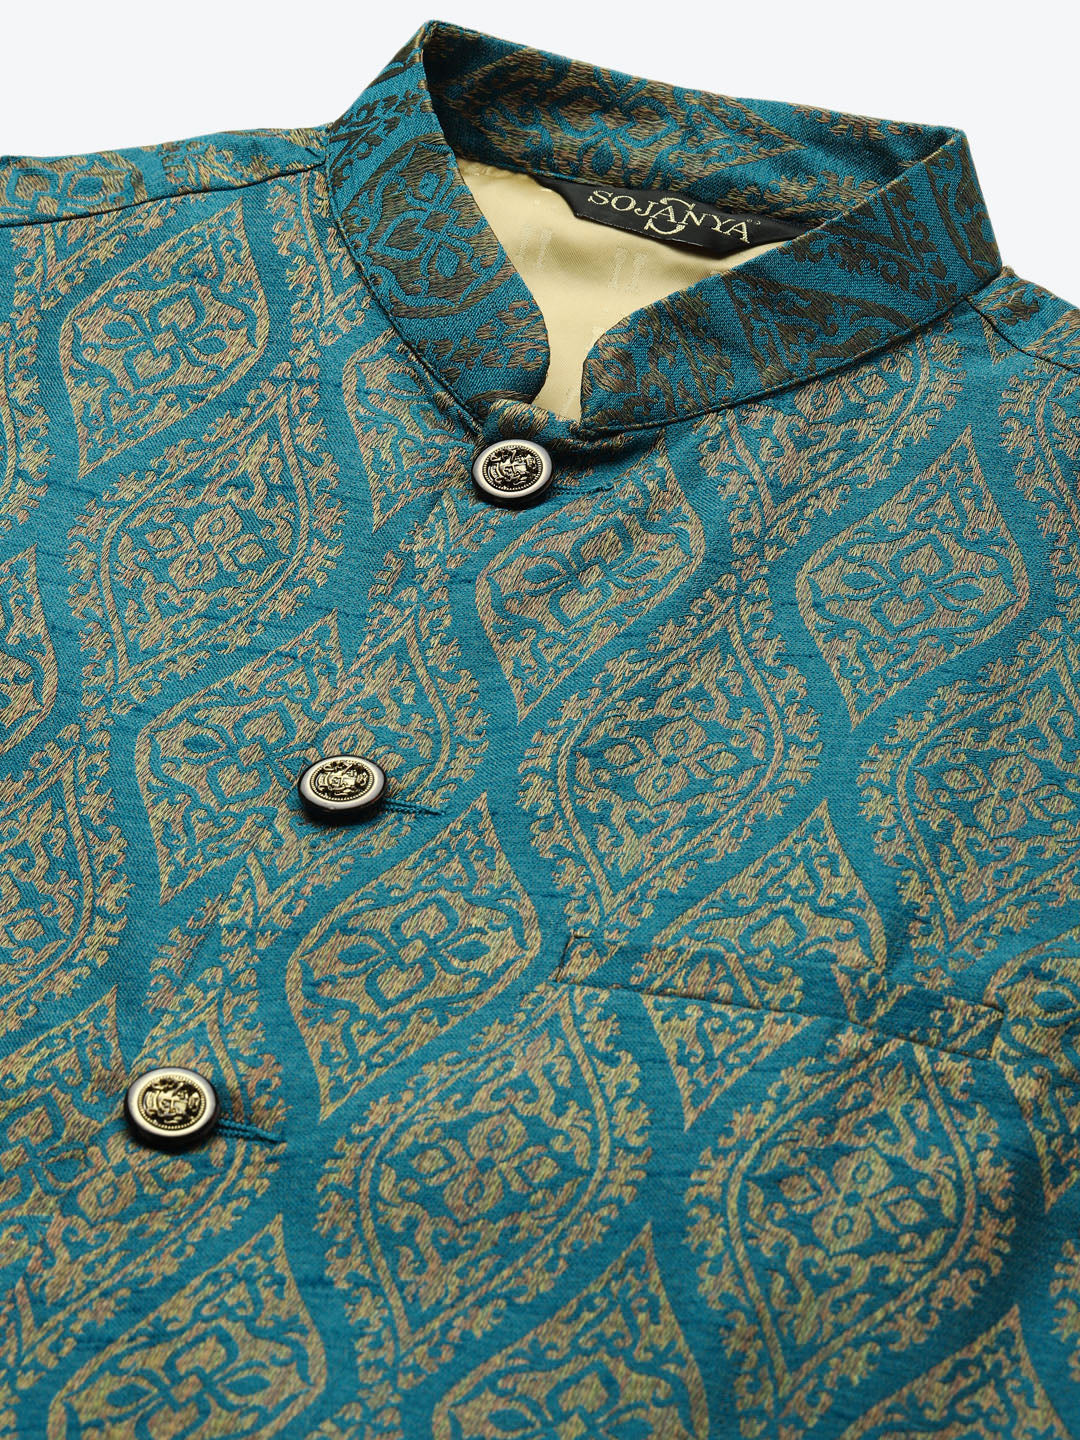 Men's Jacquard Silk Teal Blue & Gold Nehru Jacket - Sojanya